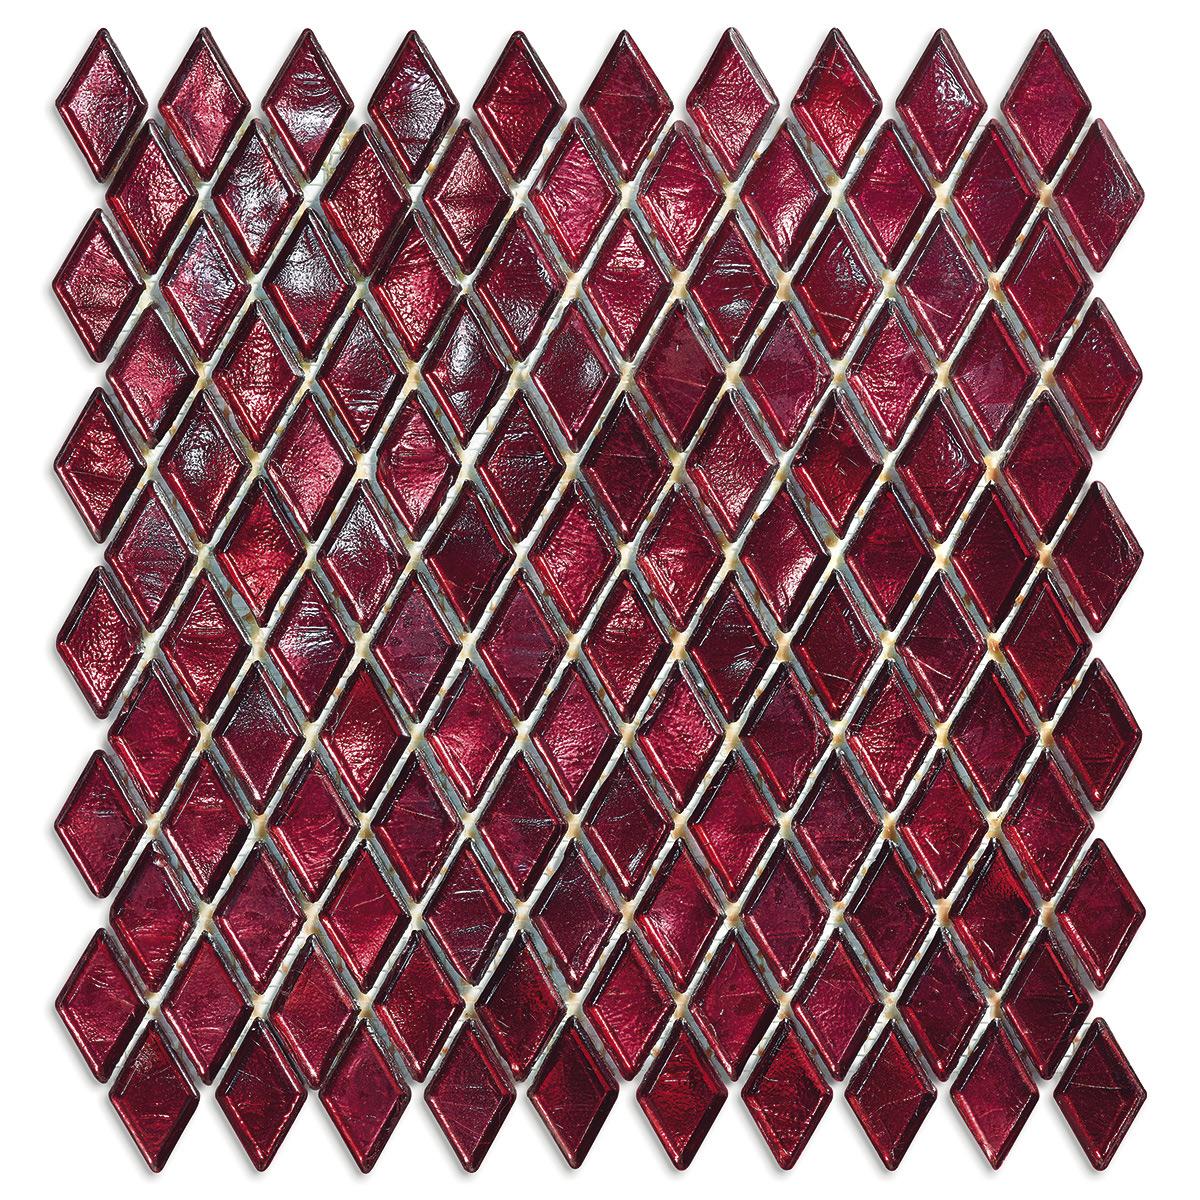 Sicis Shandon Diamond Glass Mosaic